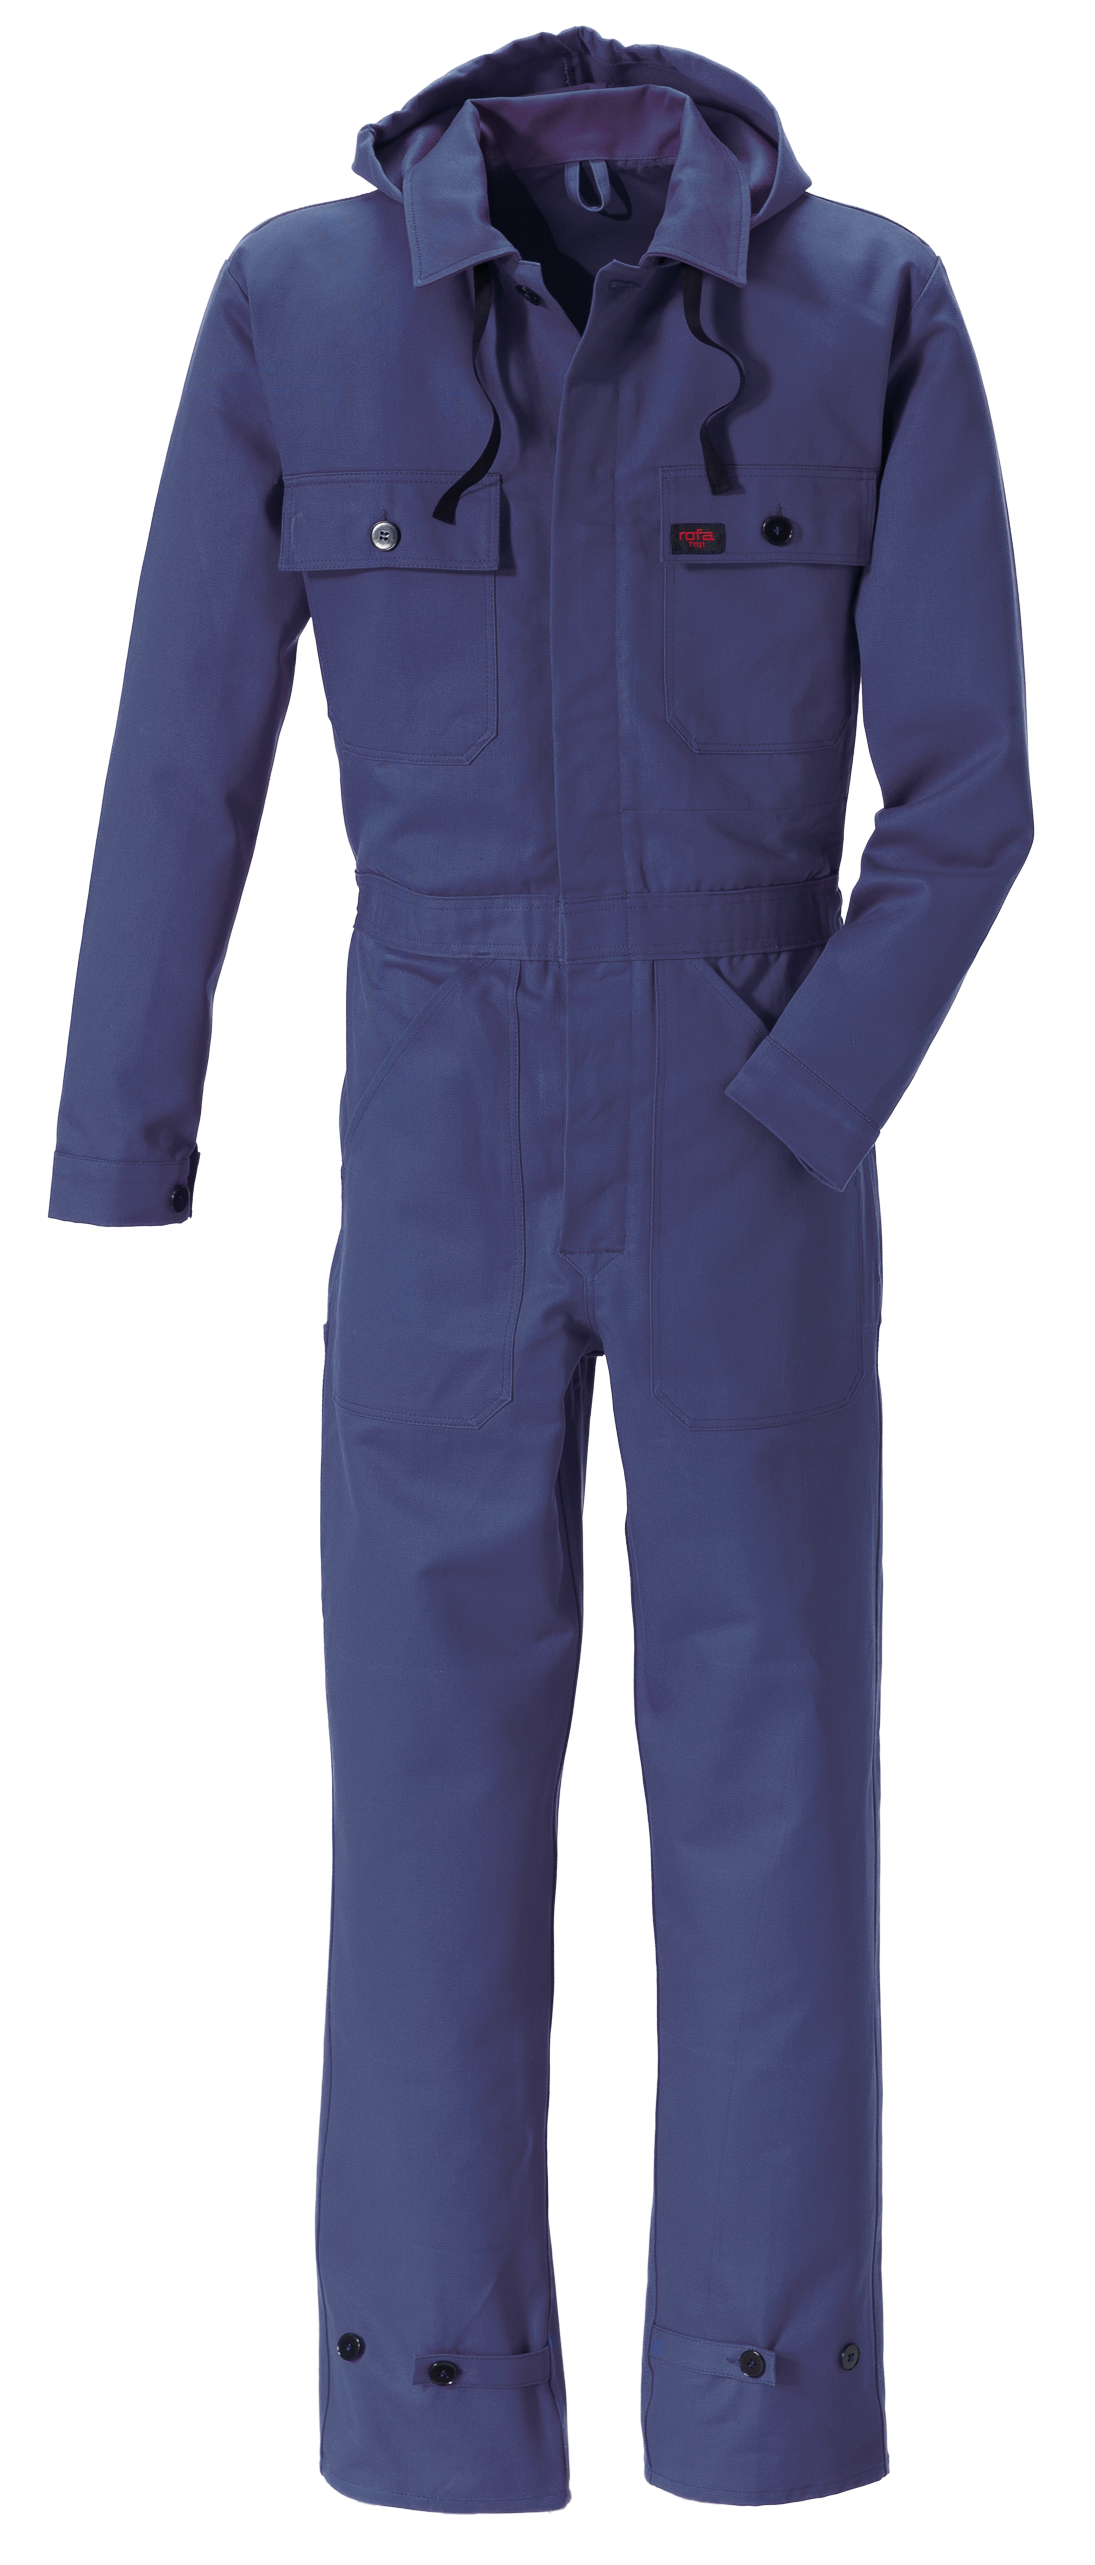 ROFA-Workwear, Arbeits-Berufs-Overall, Rallye-Kombi, ca. 330 g/m², hydronblau